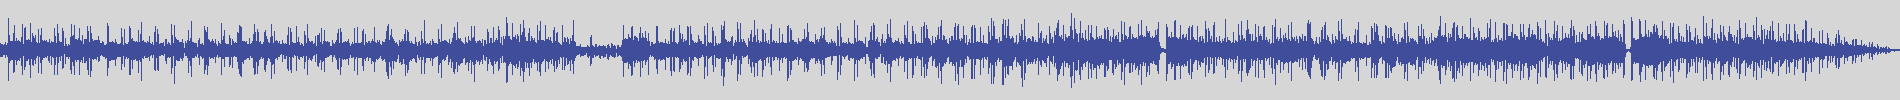 digiphonic_records [DPR013] Little Tony - Un Uomo Piange Solo Per Amore [Original Mix] audio wave form